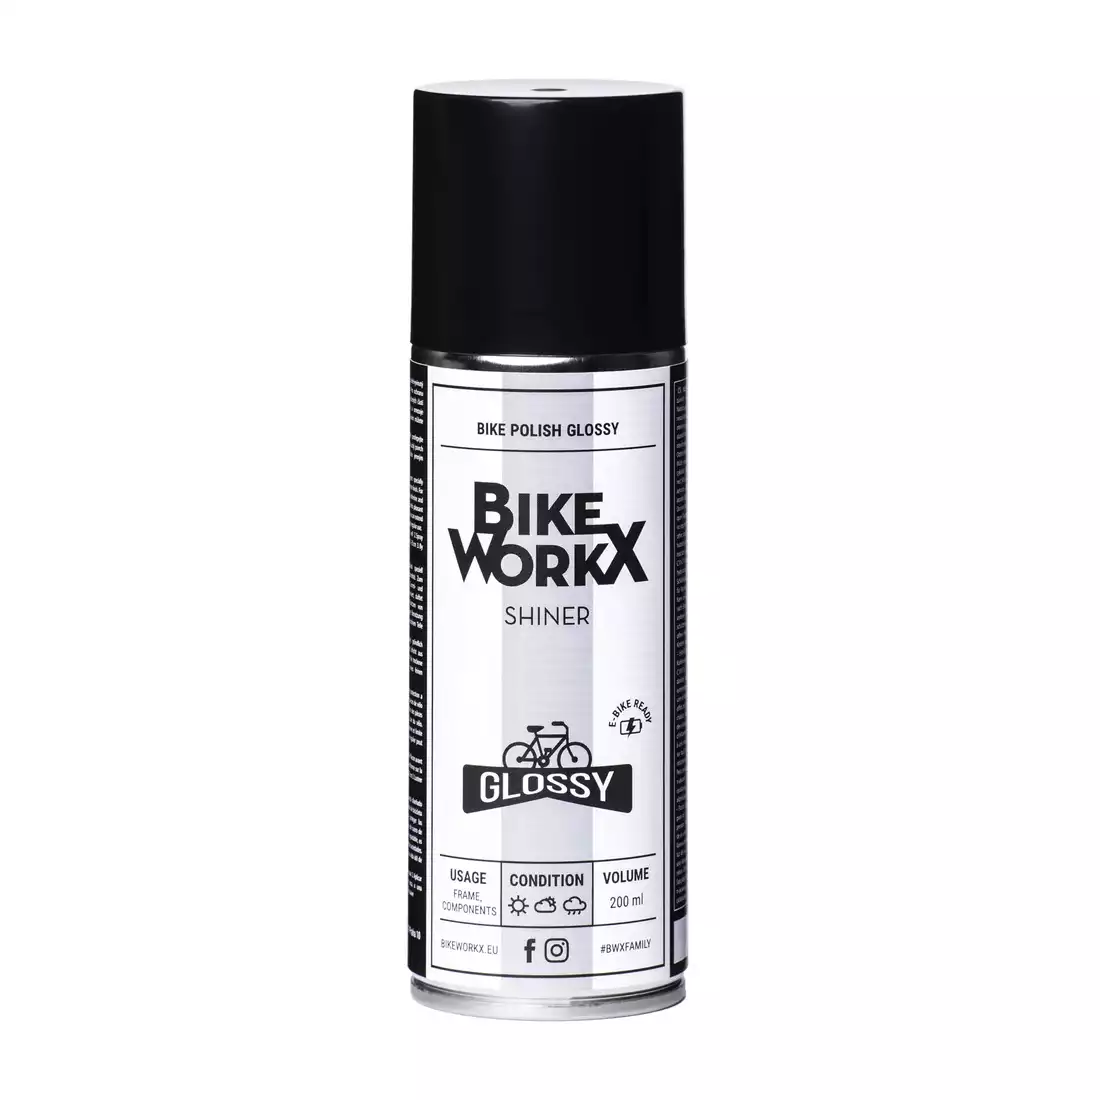 BIKE WORKX SHINE STAR GLOSSY bicycle polish 200 ml